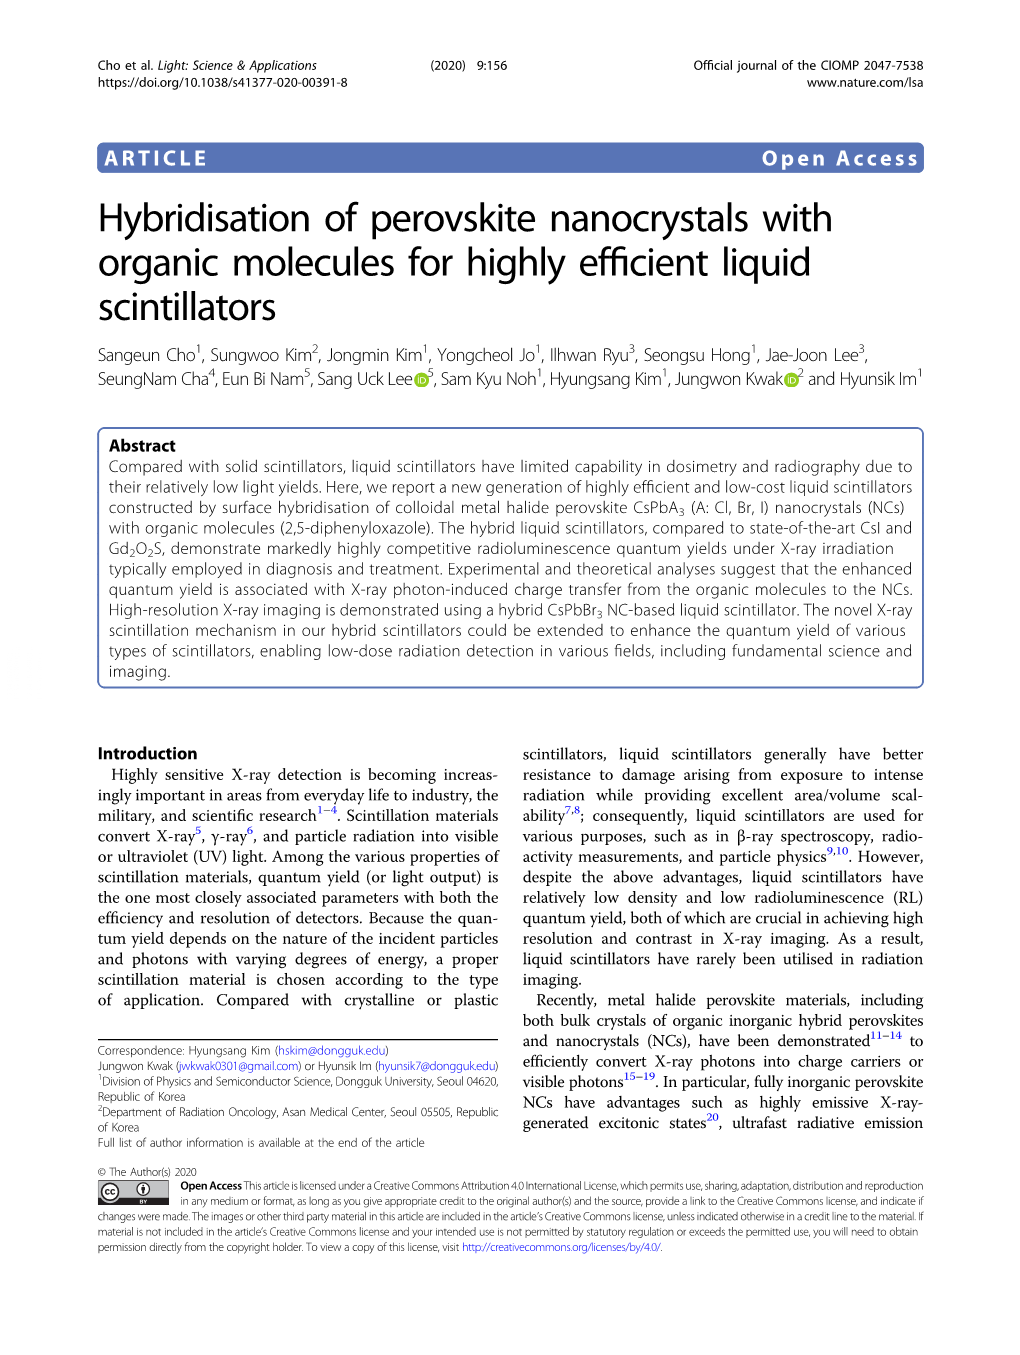 Hybridisation of Perovskite Nanocrystals with Organic Molecules for Highly Efficient Liquid Scintillators